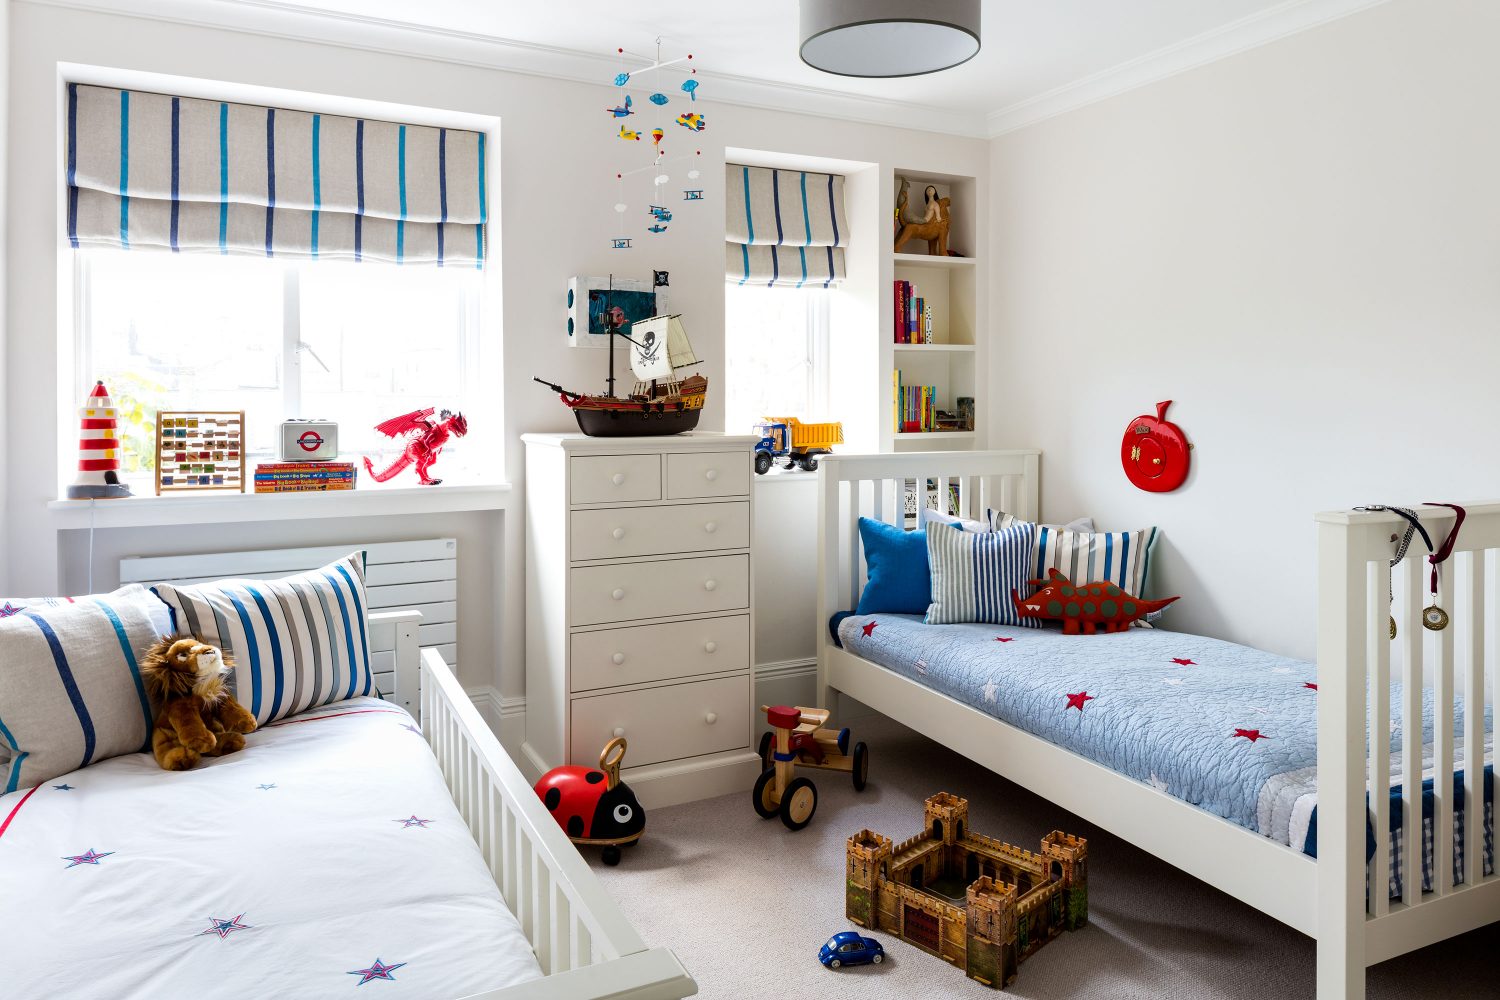 British Reserve by Daniel Hopwood – children’s bedroom with nautical accents. Interior designer Kensington, London